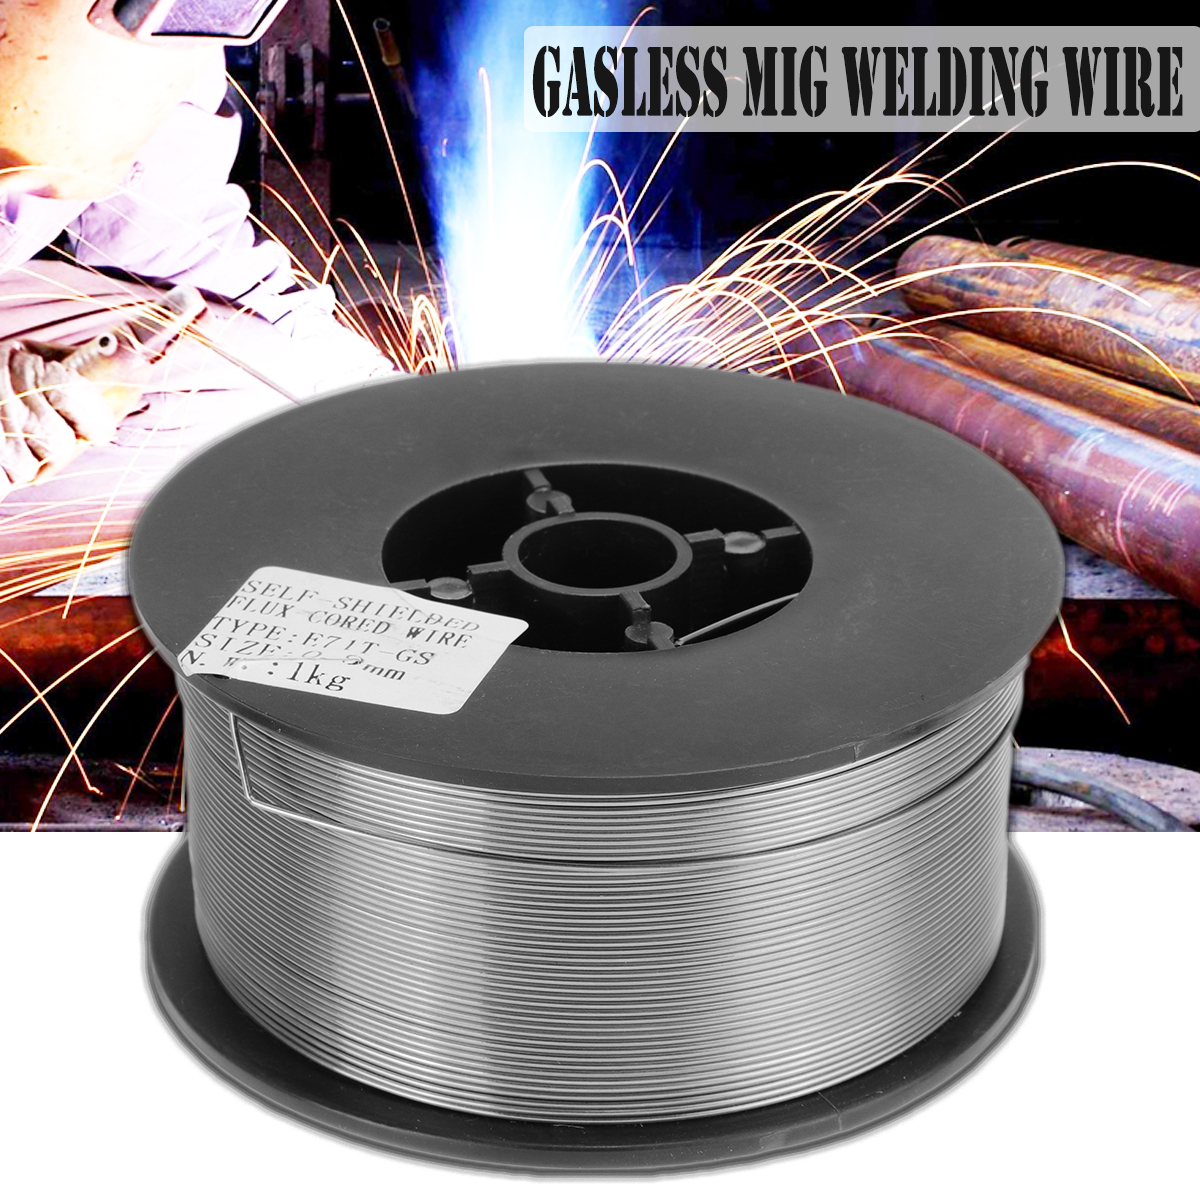 Купить порошковую сварочную проволоку. Welding wire e71t GS. Сварочная проволока Welding wire 0.8. Проводка сварочная порошковая FLX 0,8-1 mig. 0.5Kg 1.0mm Flux cored wire.